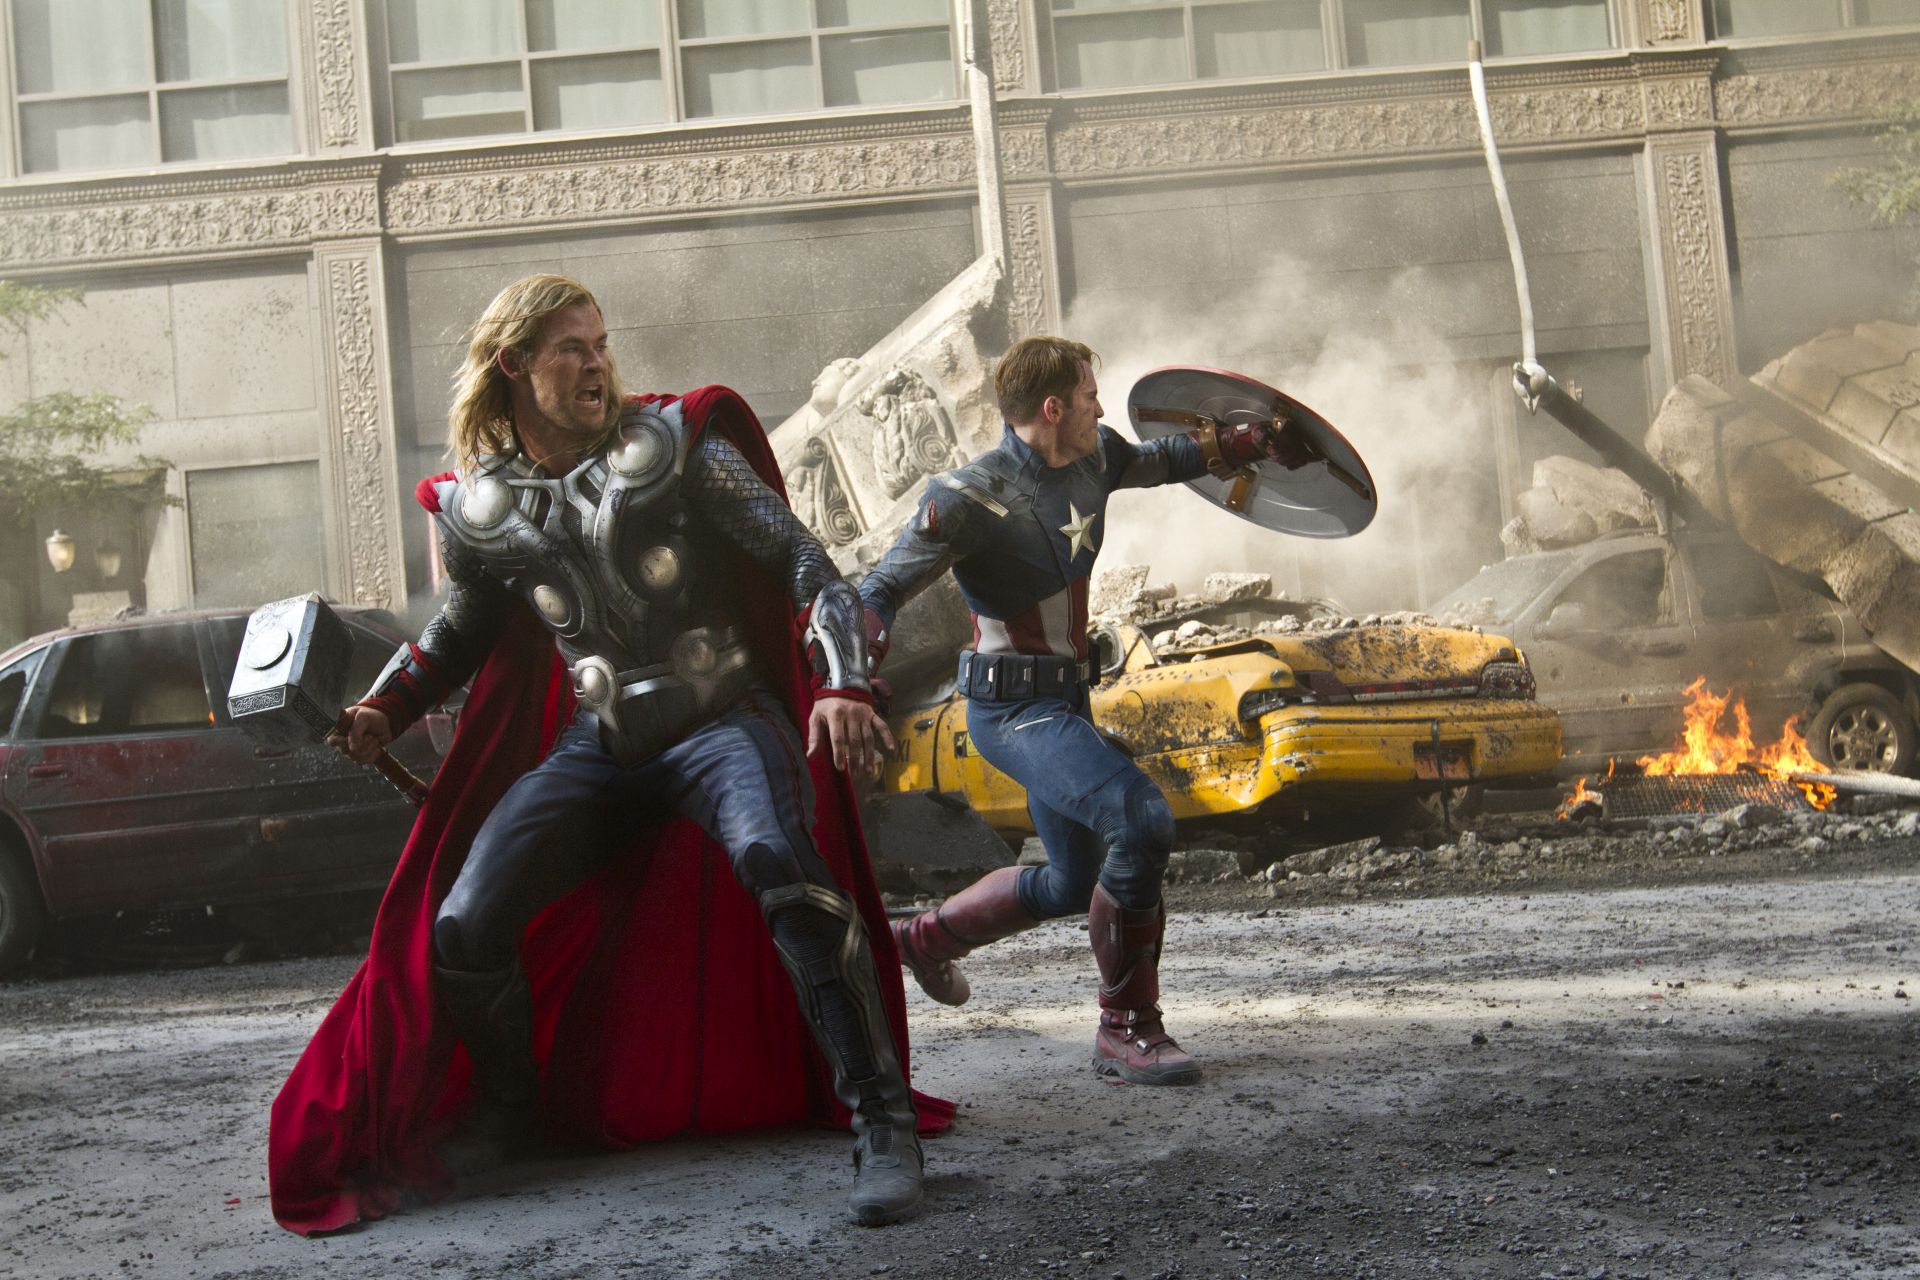 Descarga gratuita de fondo de pantalla para móvil de Los Vengadores, Capitan América, Chris Evans, Chris Hemsworth, Thor, Películas.